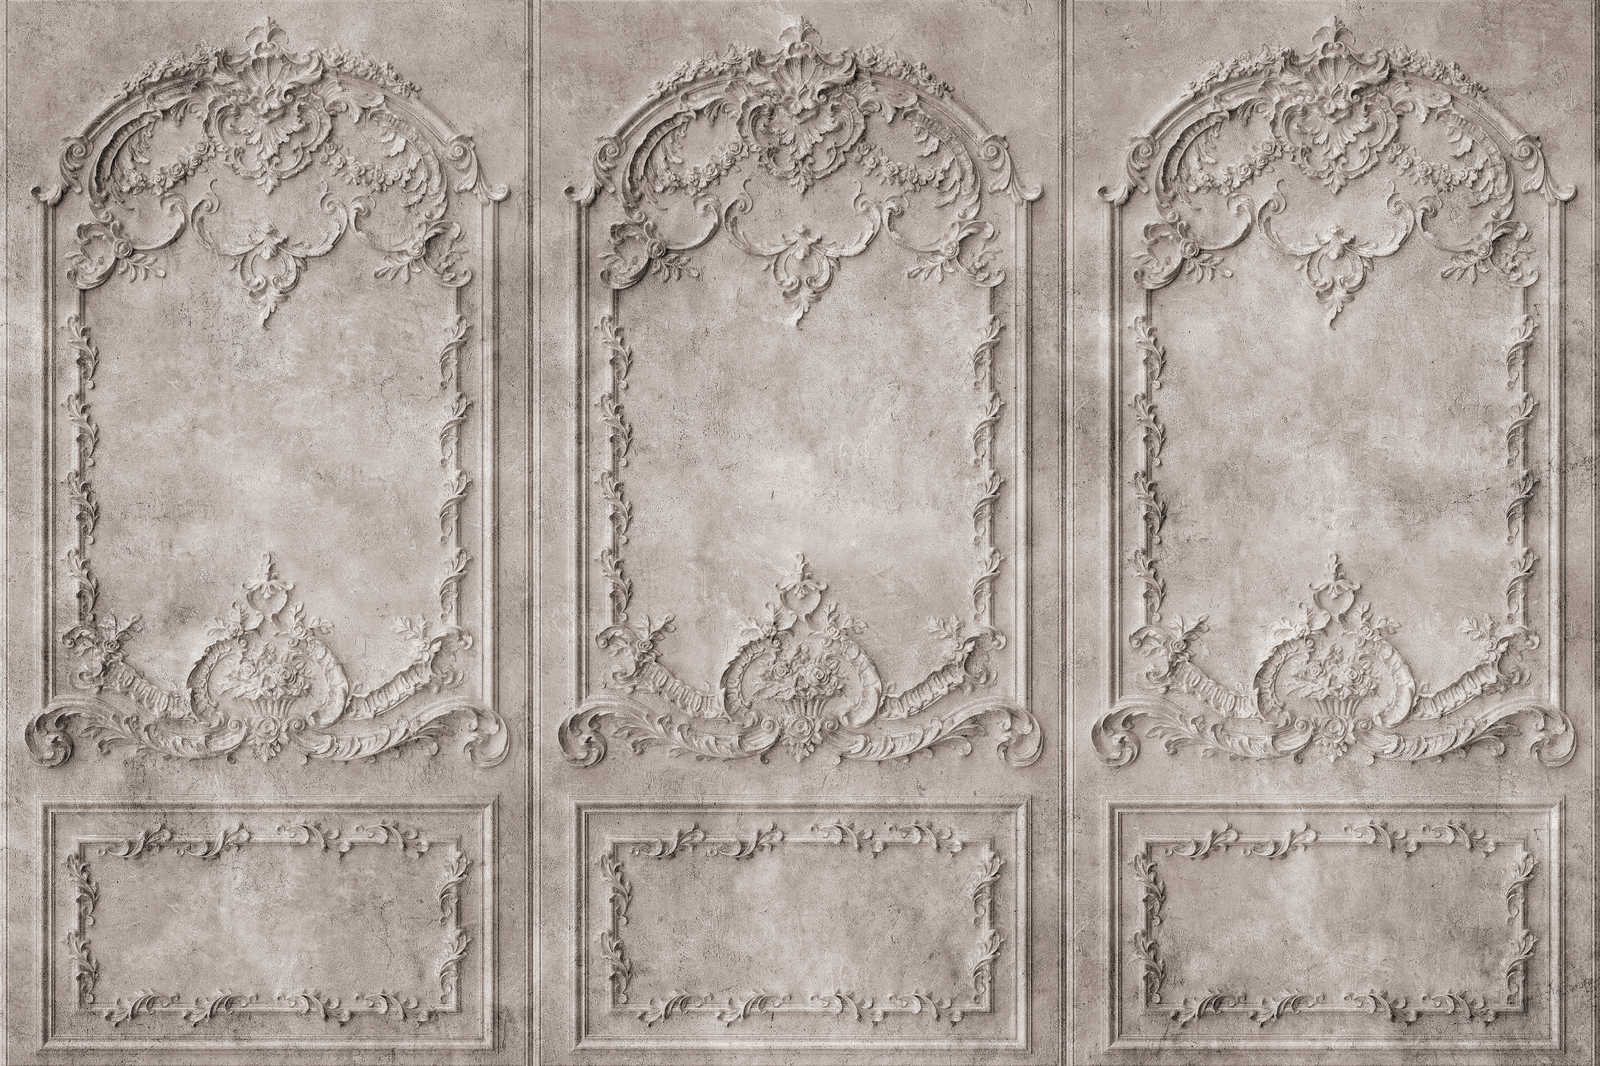             Versailles 1 - Leinwandbild Grau-Braun Holz-Paneele im Barock Stil – 1,20 m x 0,80 m
        